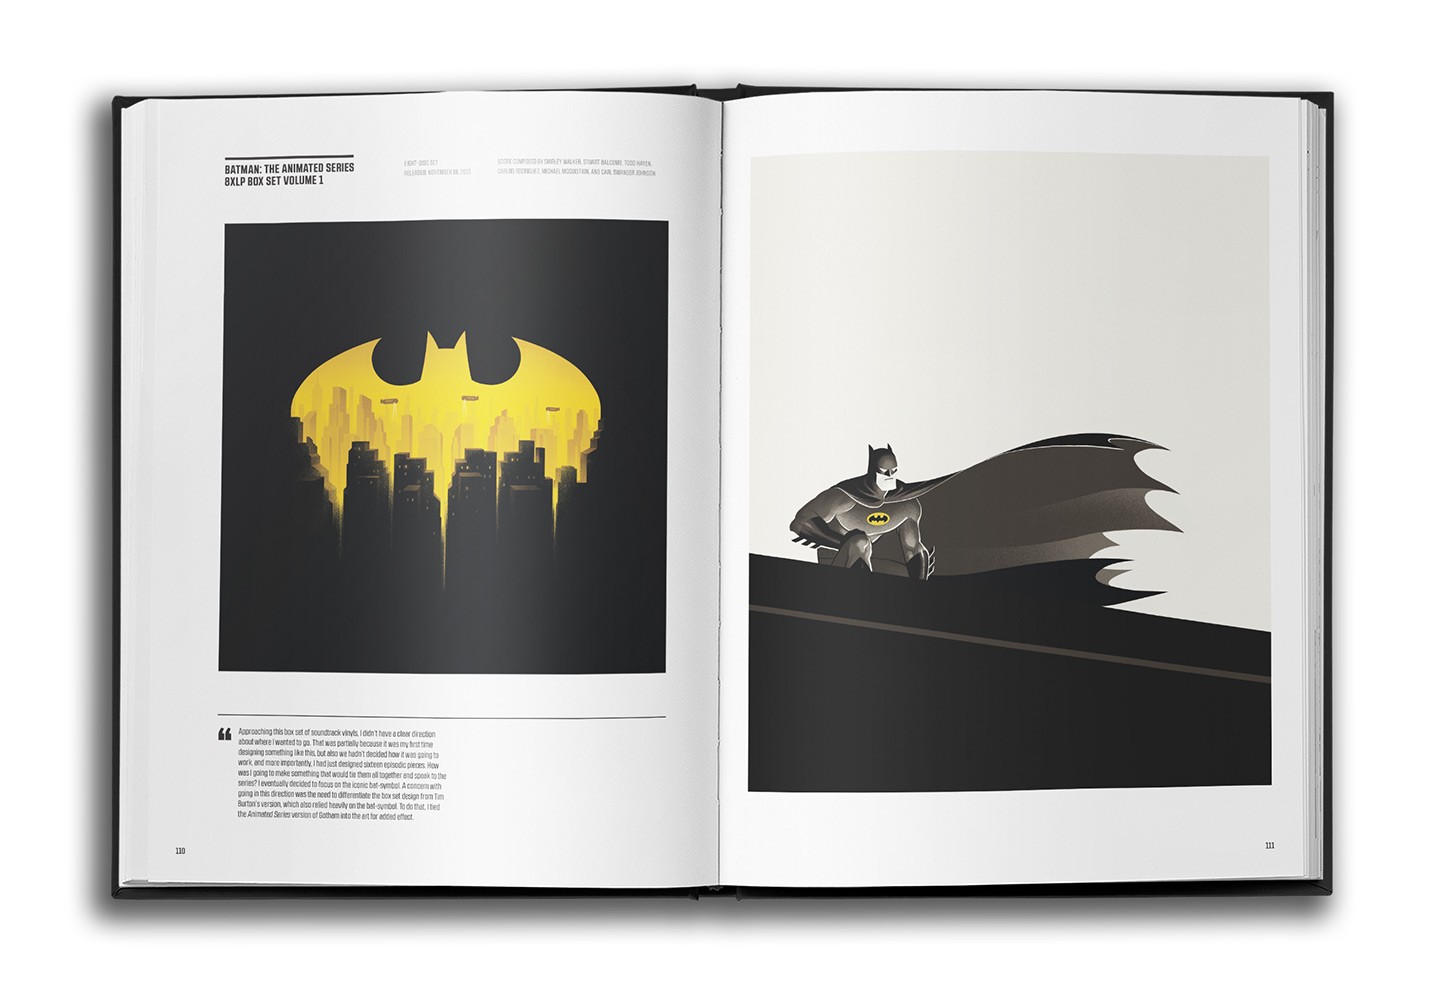 Batman: The Animated Series: The Phantom City Creative